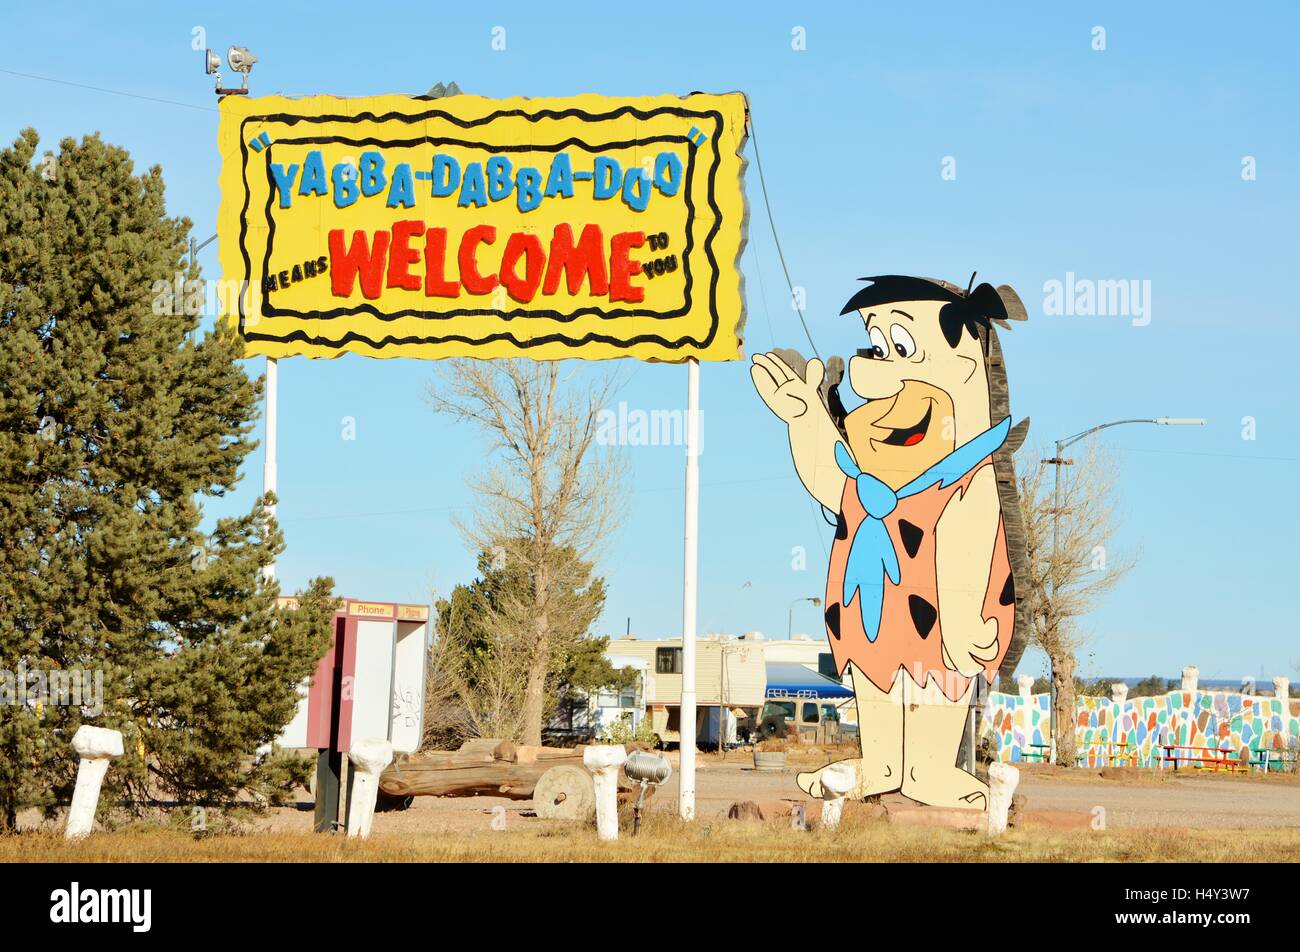 Fred Flintstone desert resort,welcome sign,yabba dabba doo,giant fred flintstone, Stock Photo